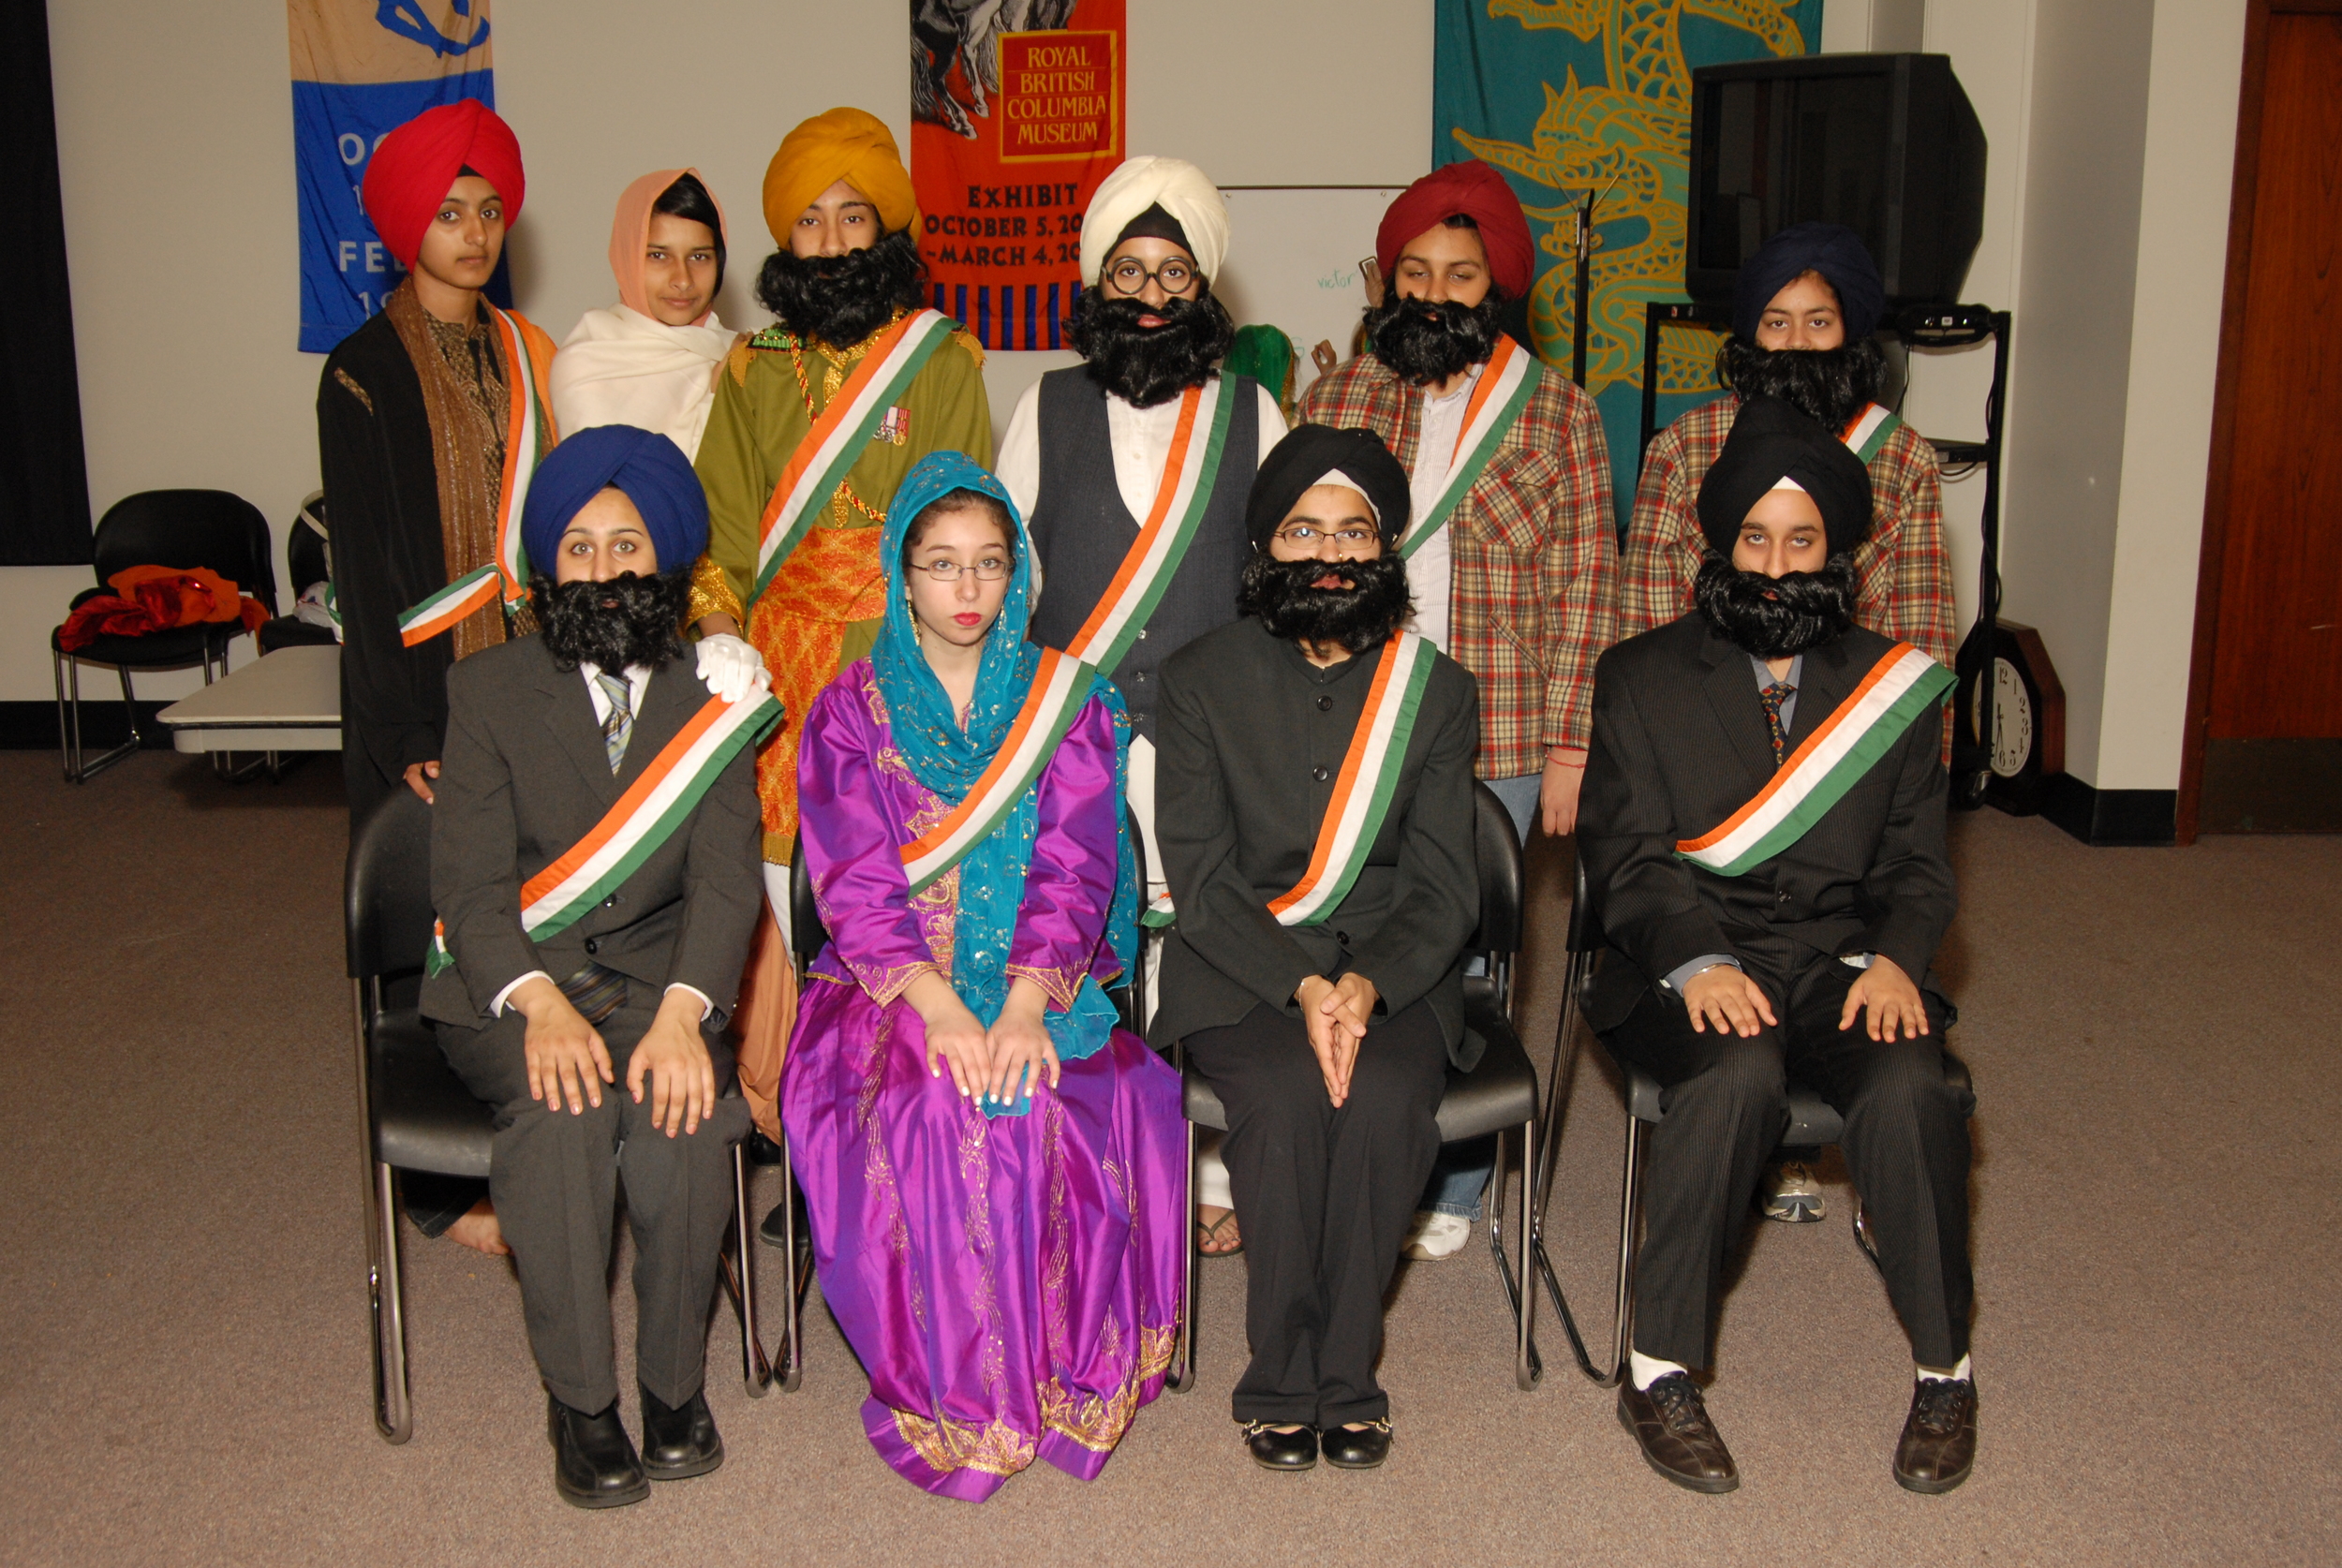   Royal BC Museum 2008 Sikh Pioneers Skit  